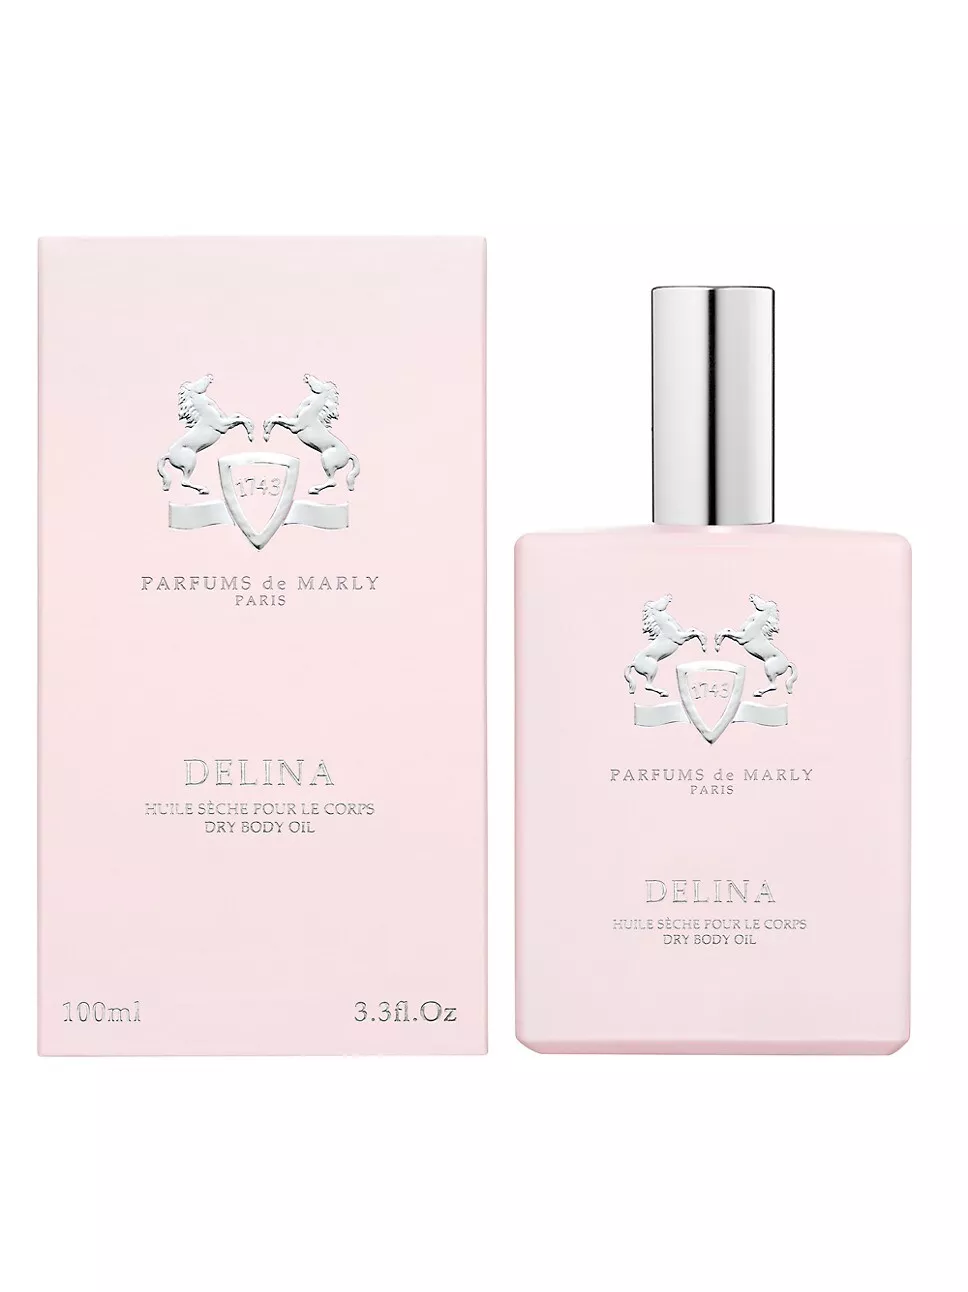 Delina Eau de Parfum curated on LTK